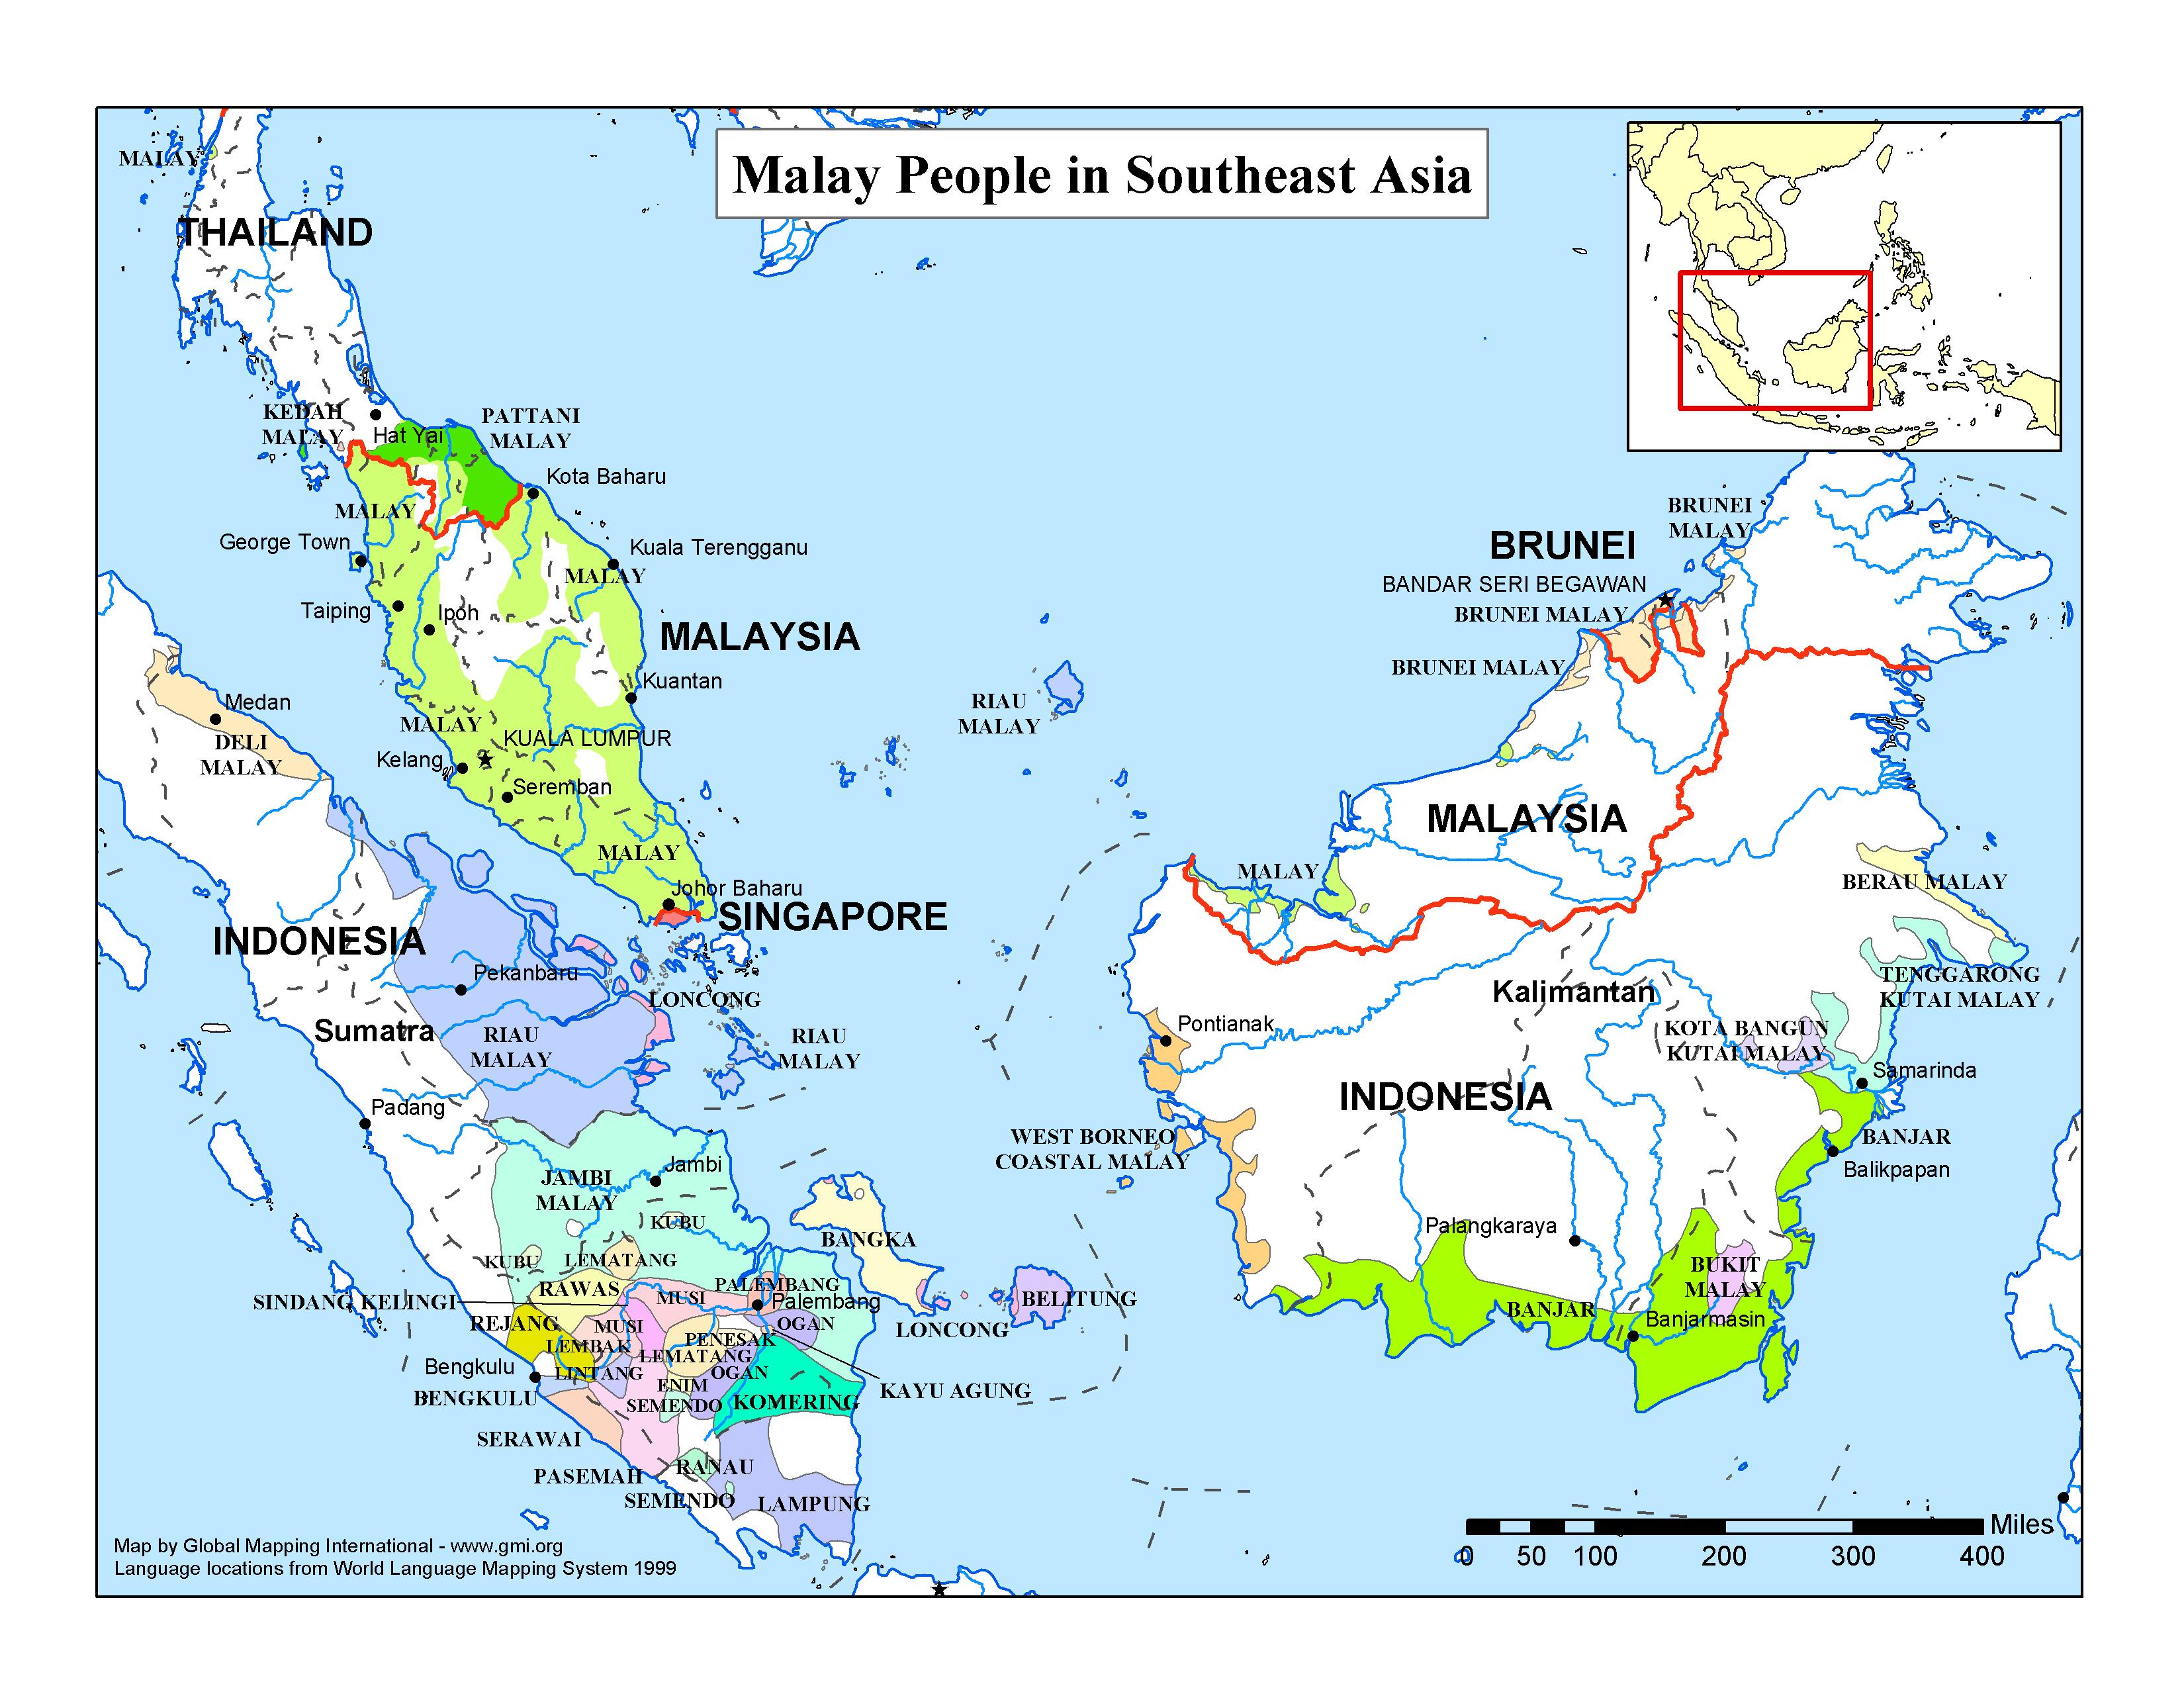 Malay People in Southeast Asia